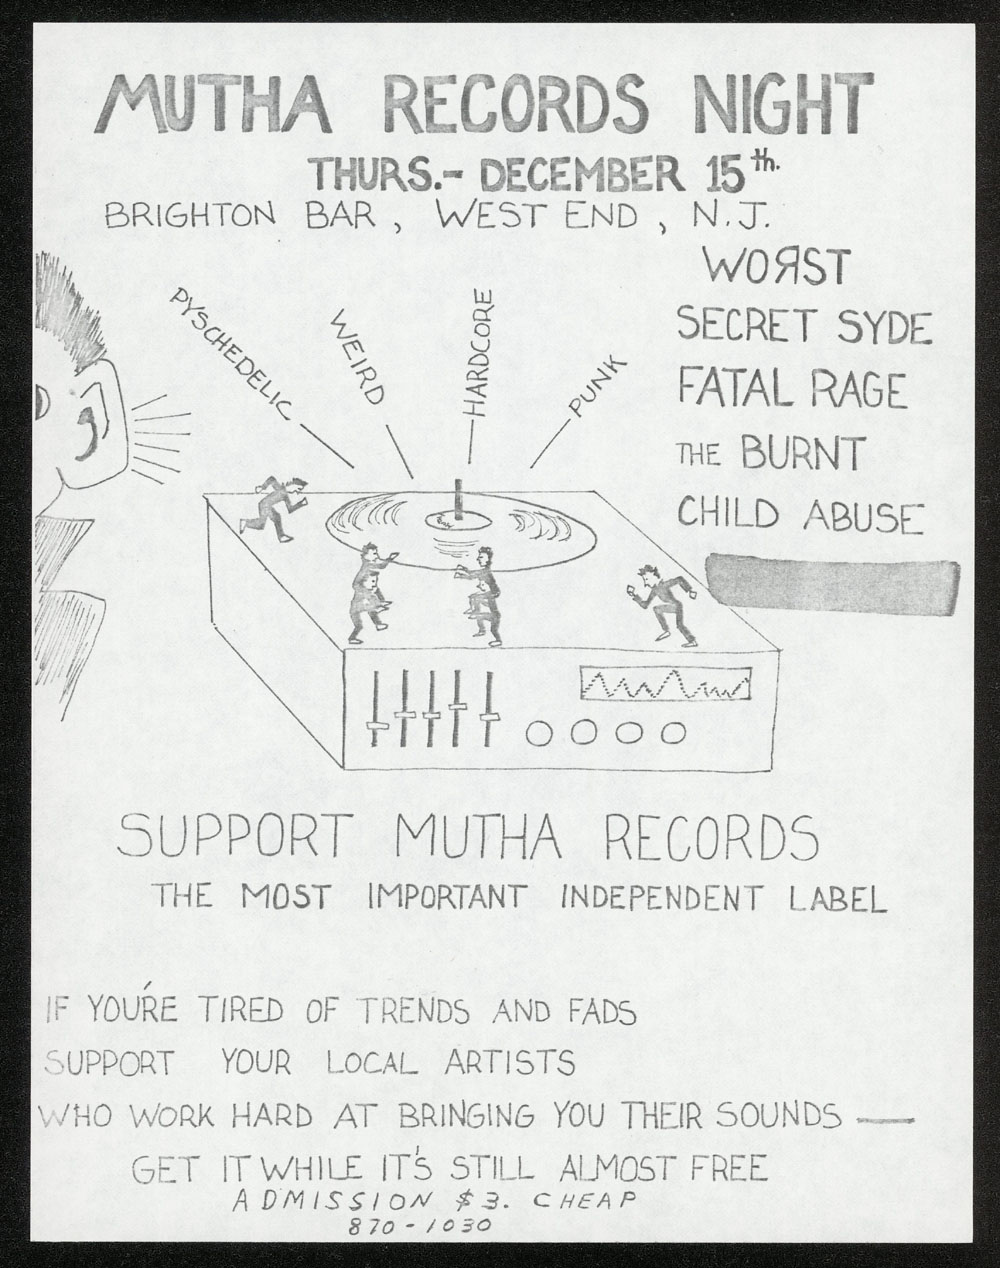 MUTHA RECORDS NIGHT w/ Worst, Secret Syde, Fatal Rage, Burnt, Child Abuse at Brighton Bar